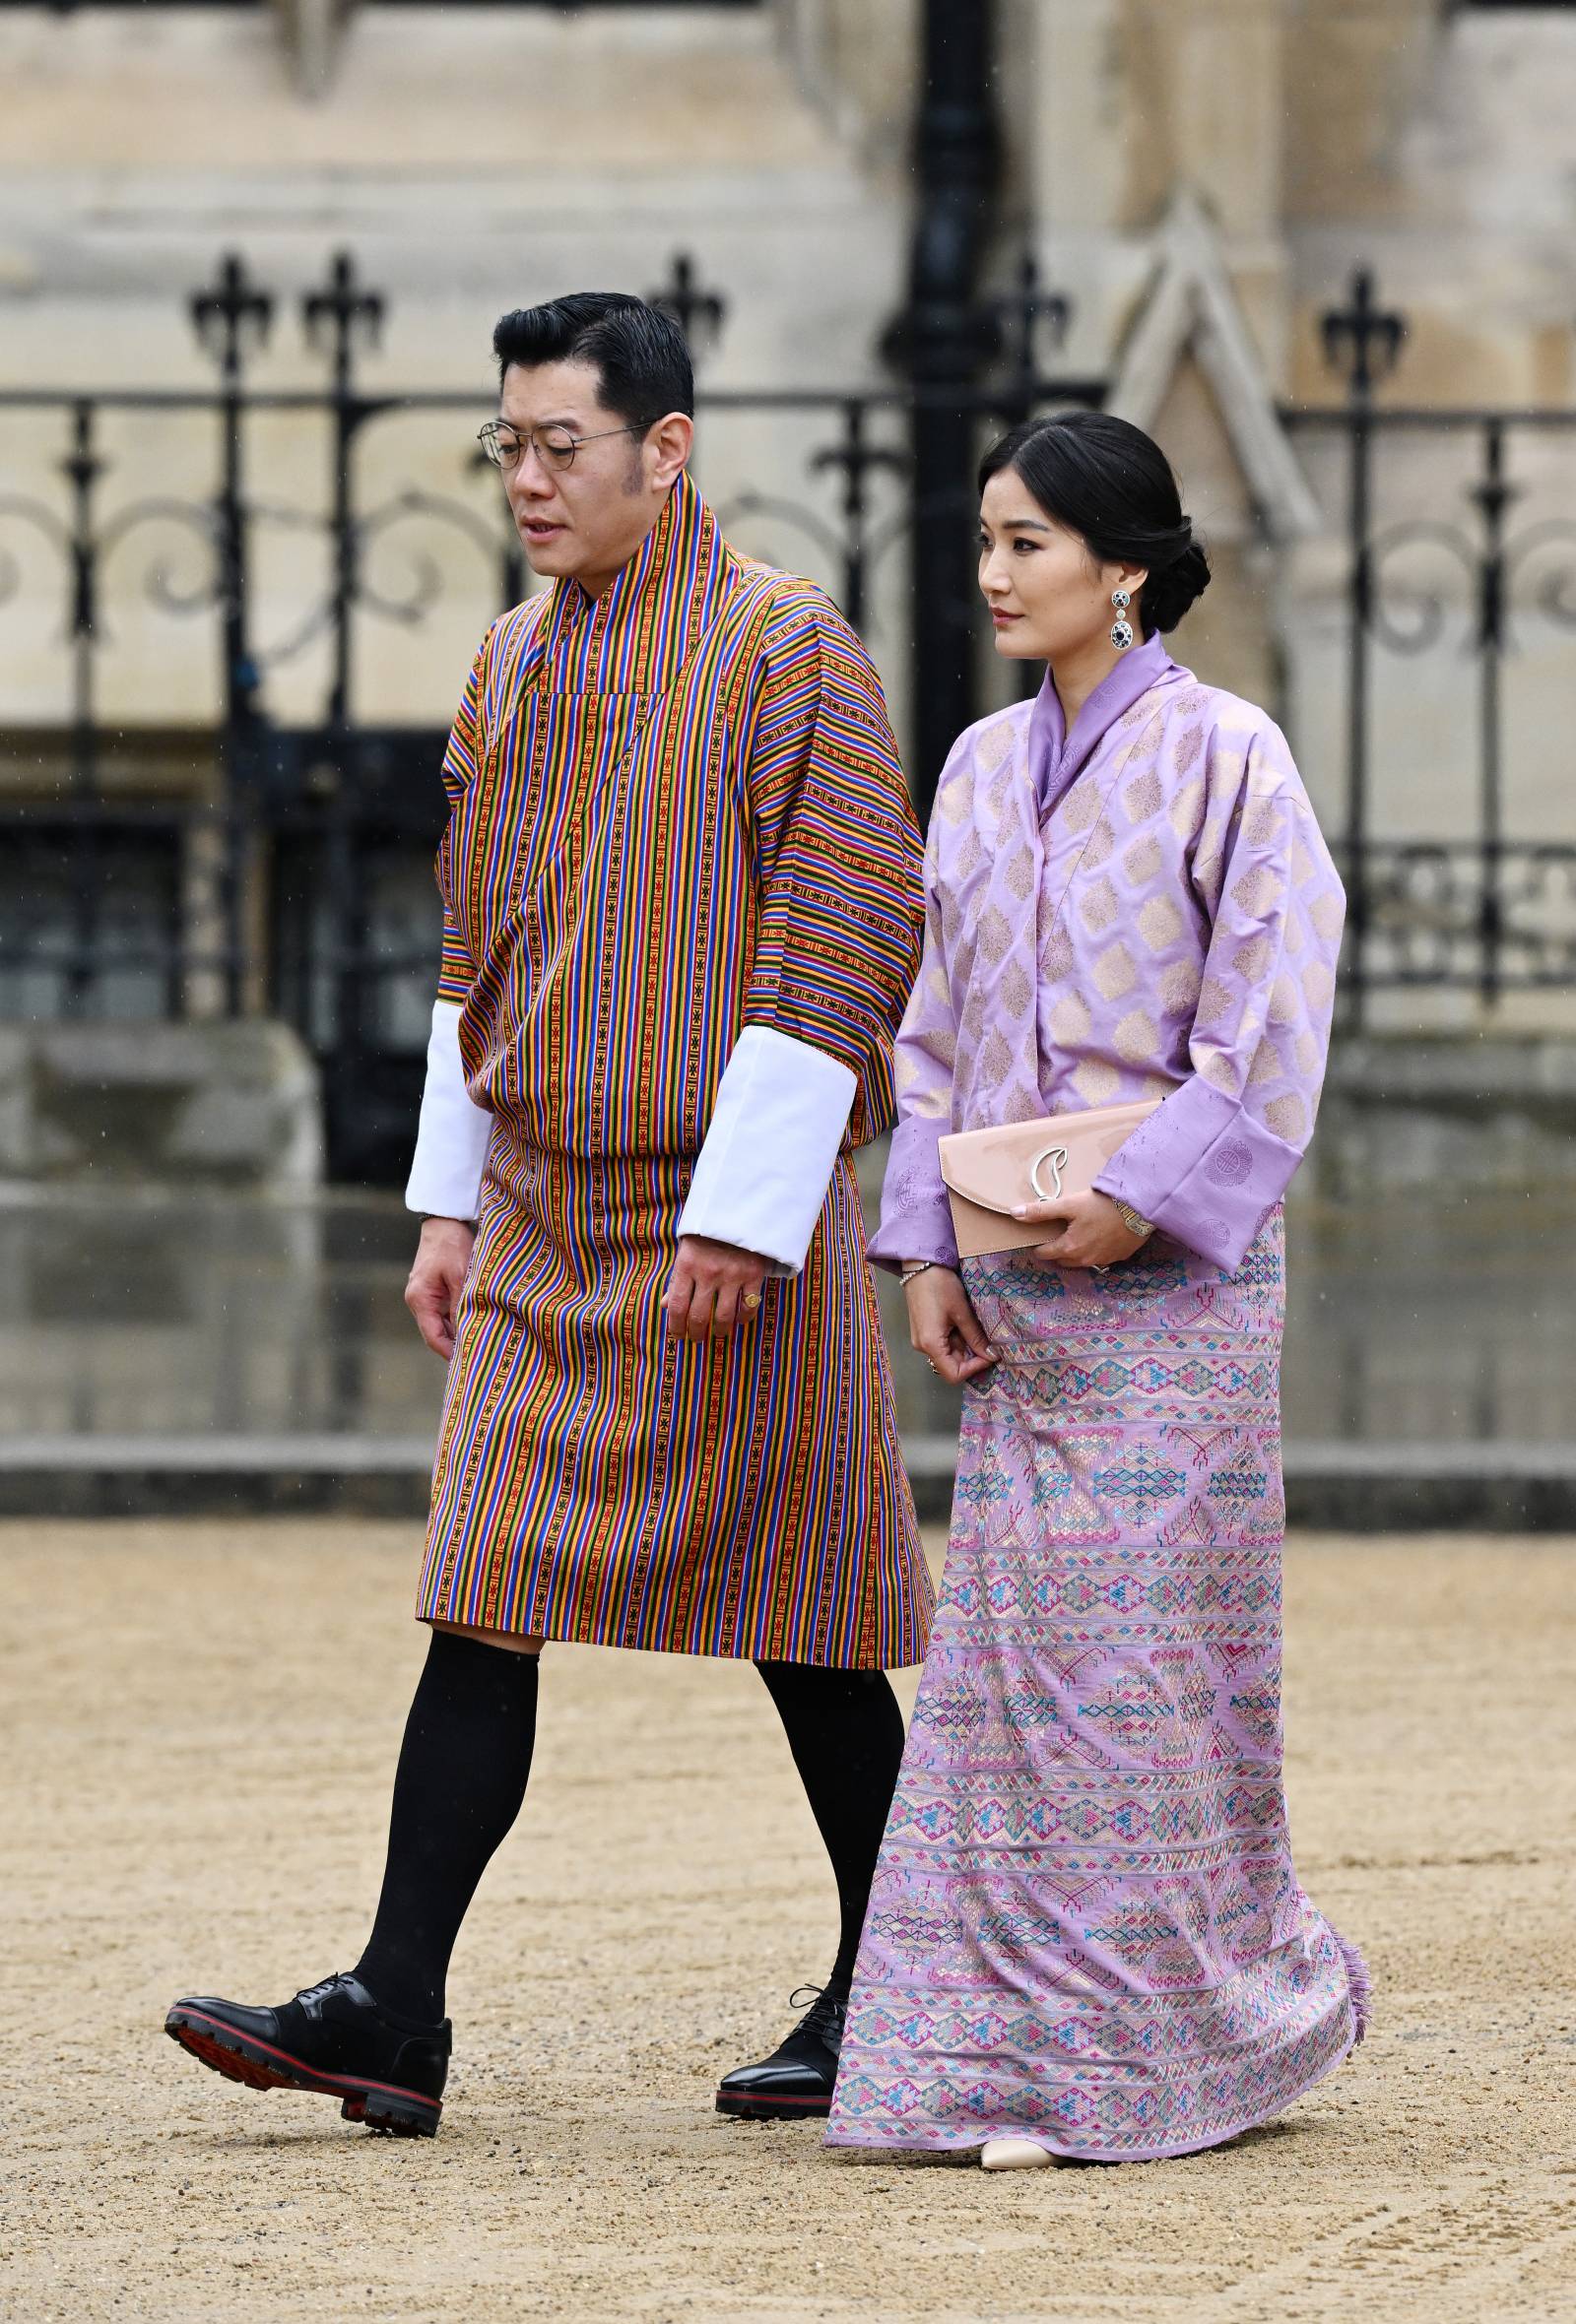 Jigme Khesar Namgyel Wangchuck i Jetsun Pema, król i królowa Bhutanu